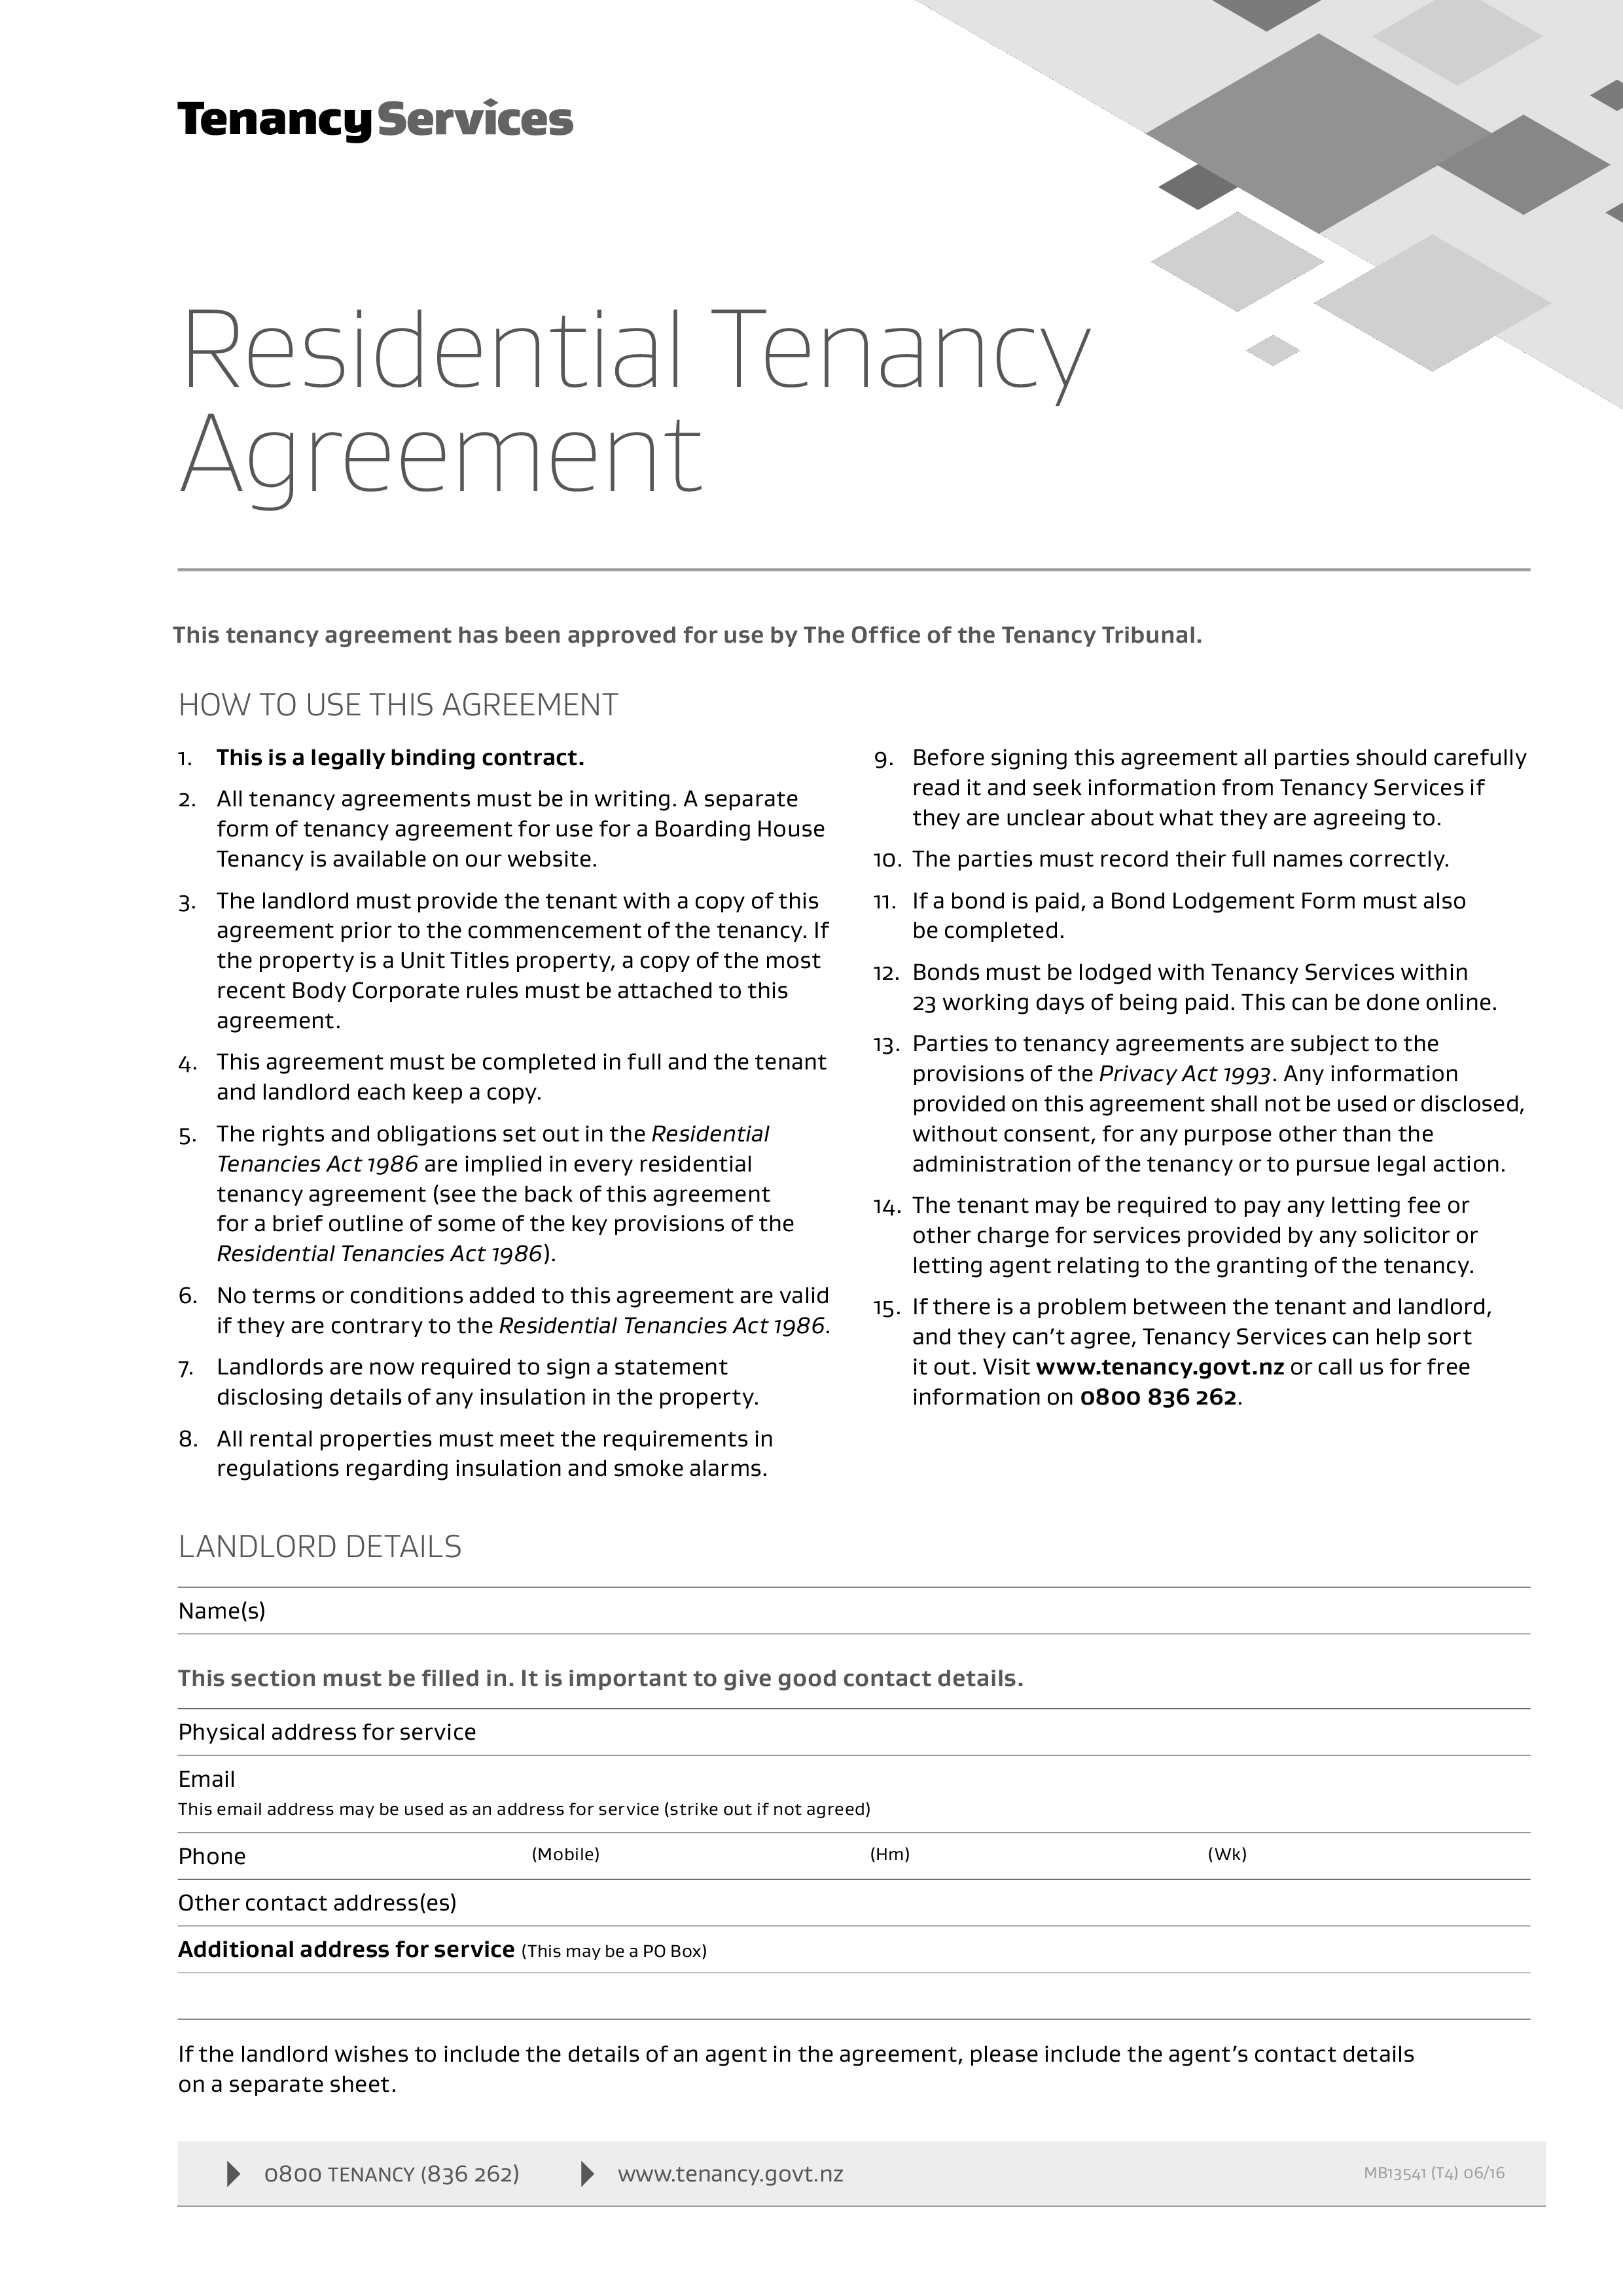 residential tenancy agreement template